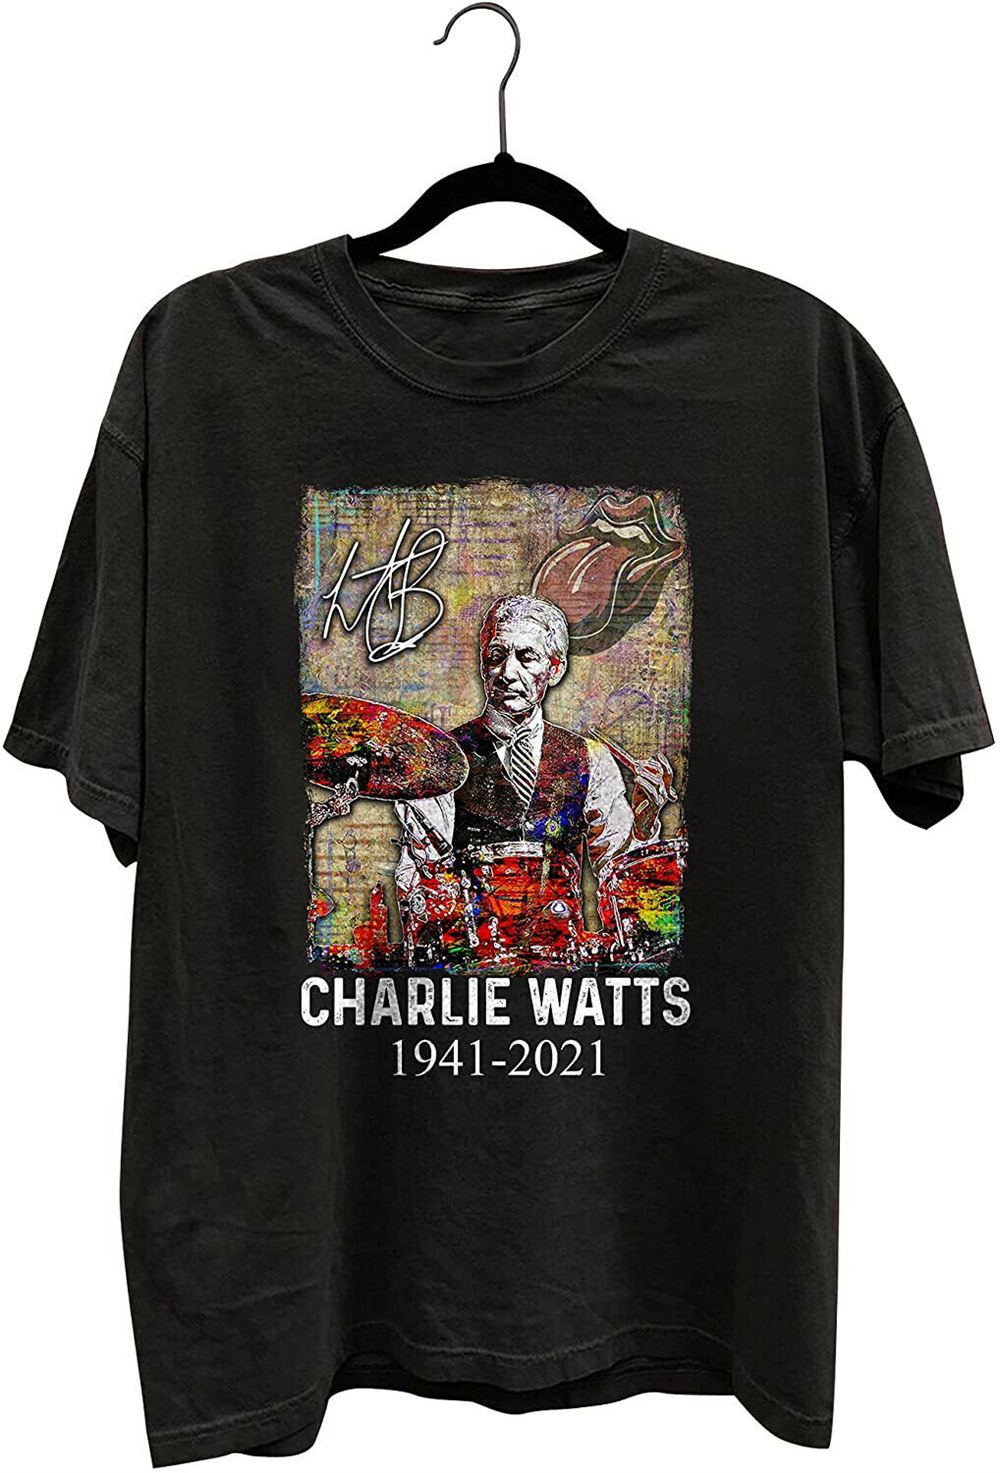 Charlie Watts Shirt Rip Charlie Watts T Shirt The Rolling Stone Shirt